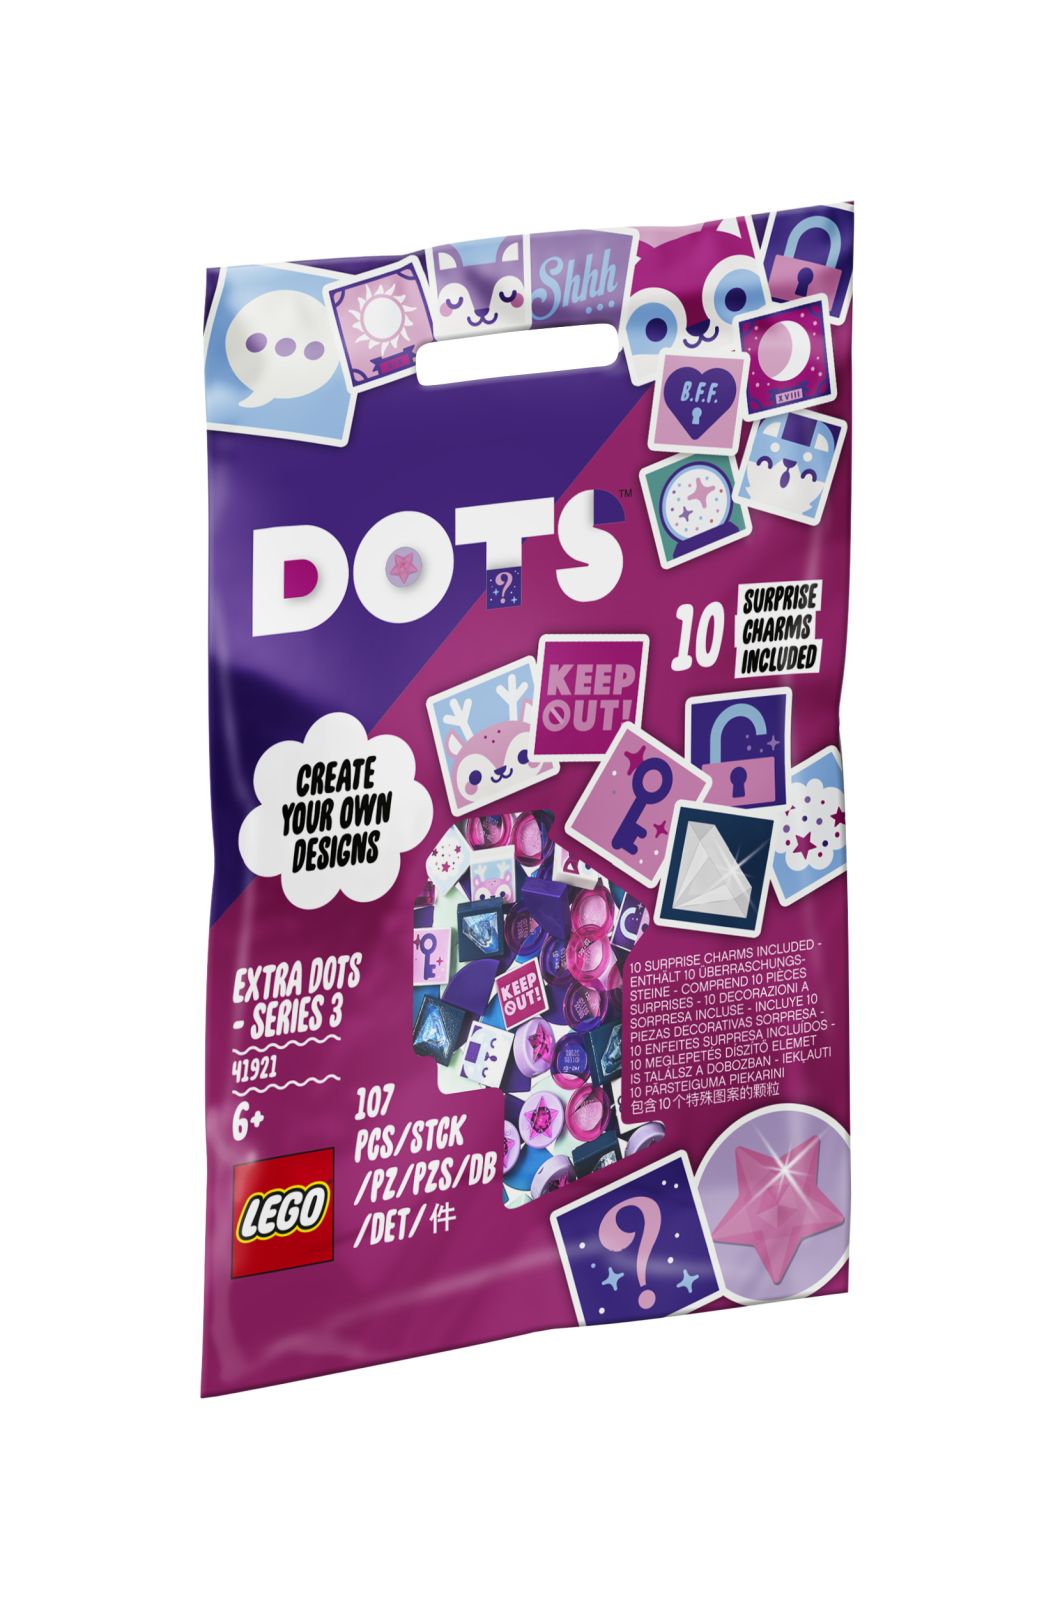 Lego dots extra - serie 3 - 41921 - DOTS, Lego